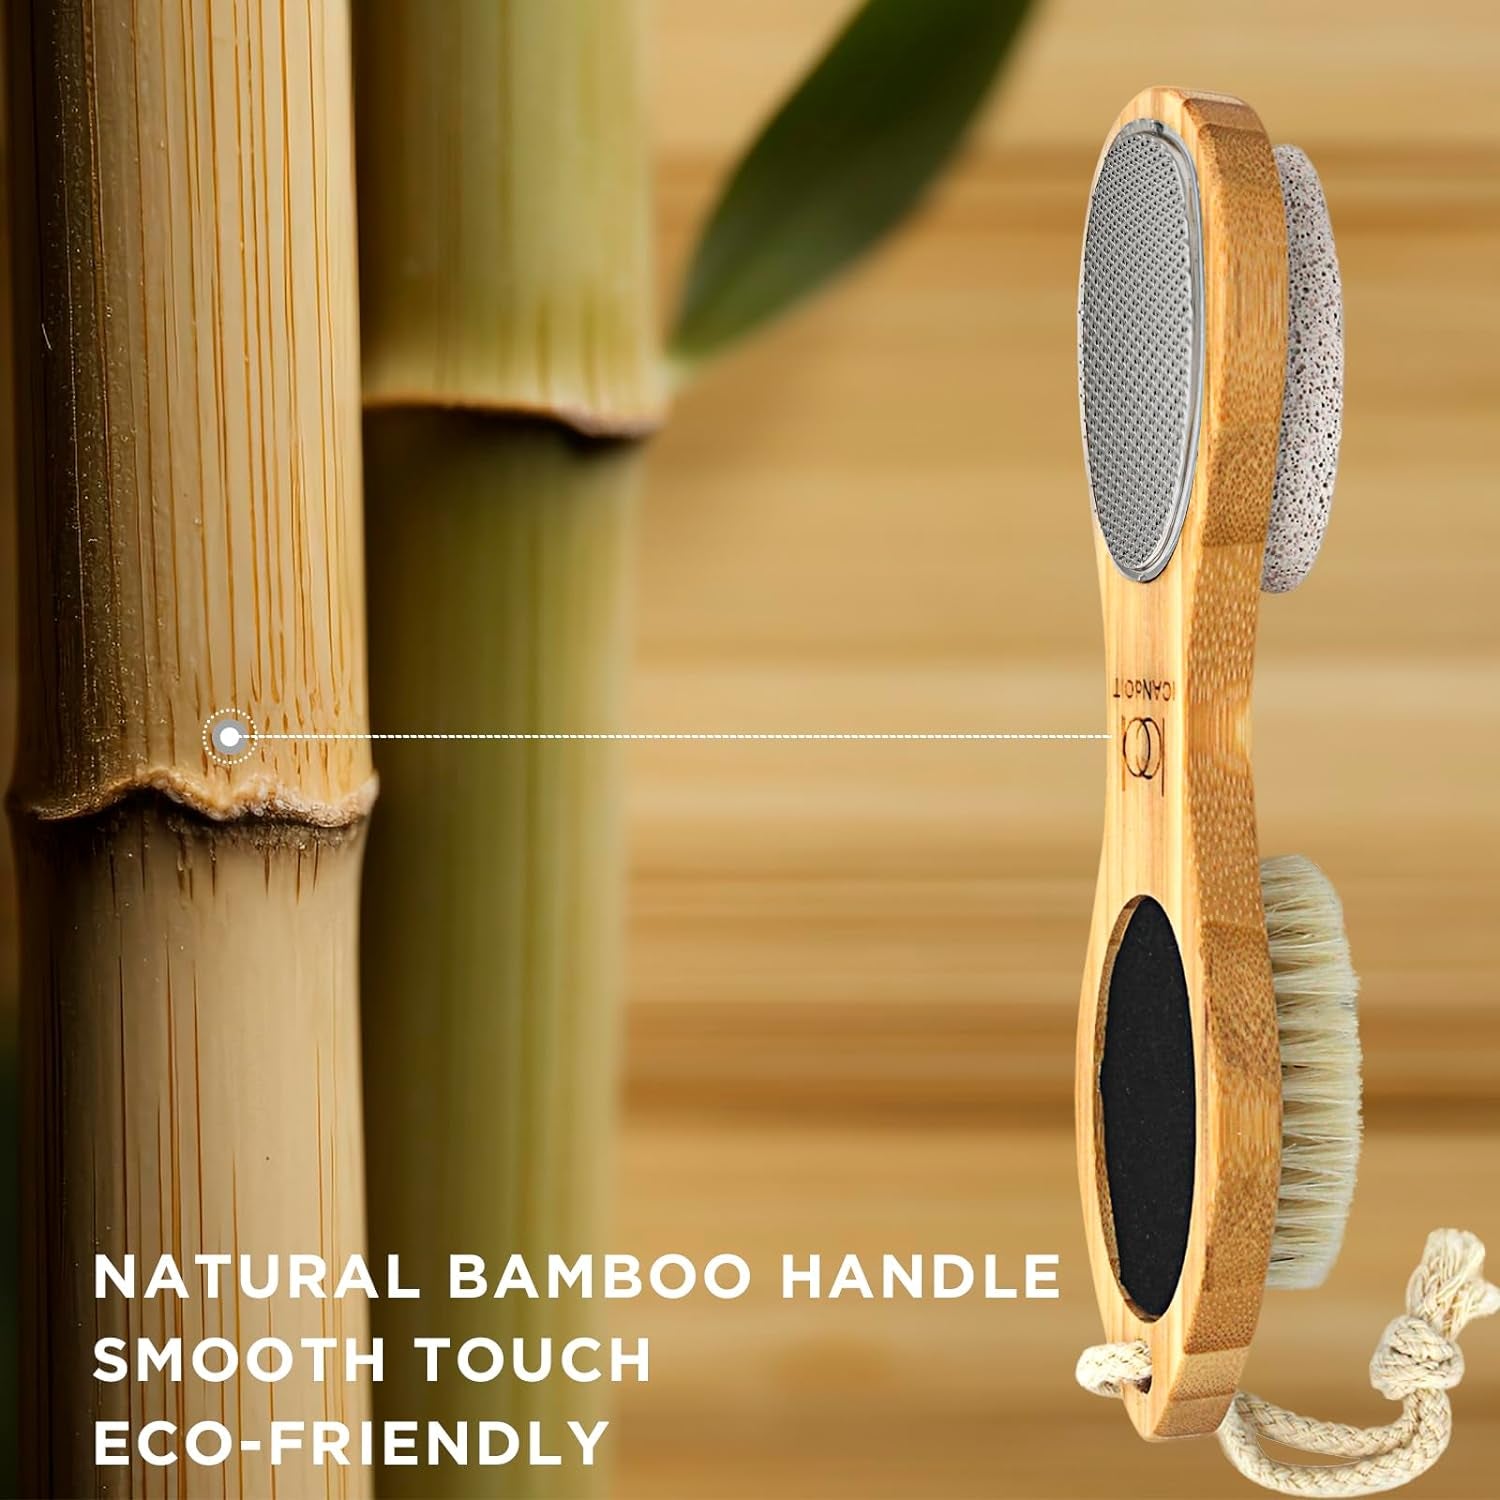 Icandoit-2 Packs Natural Bamboo Foot File Callus Remover-Multi Purpose 4 in 1 Feet Pedicure Kit with Boar Bristle Brush,Pumice Stone,Foot Rasp,Sand Paper